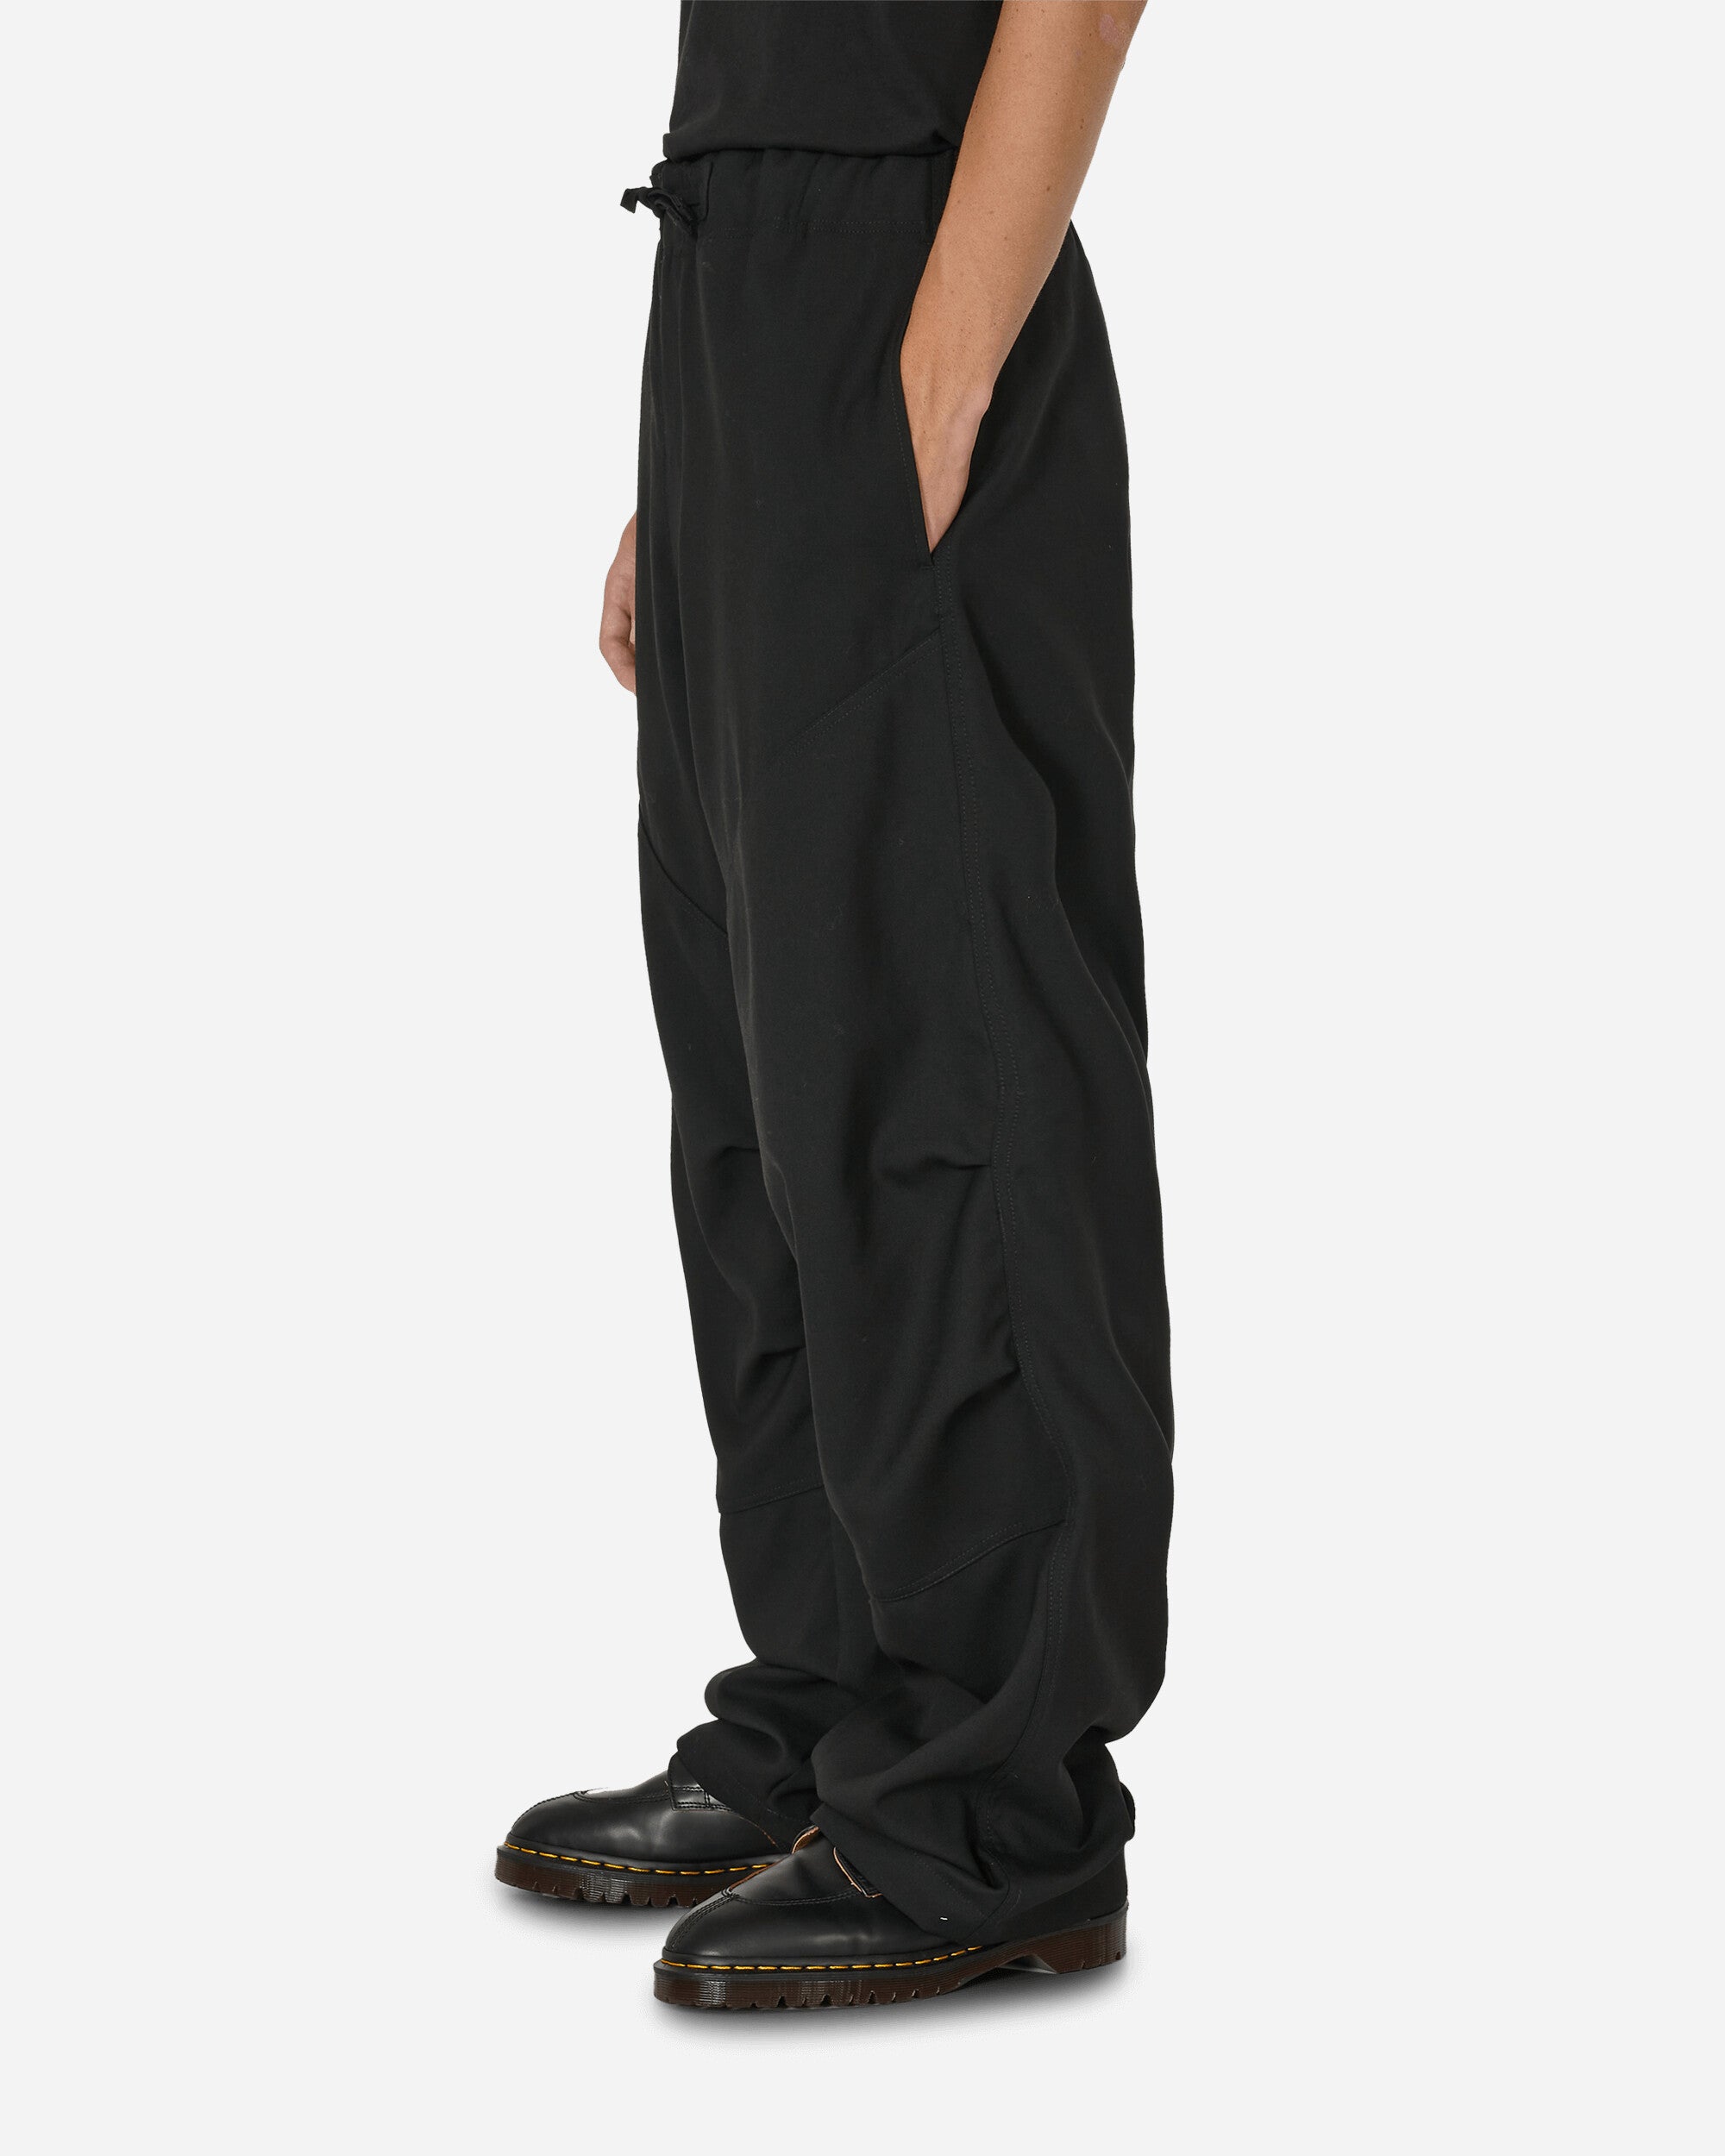 OAMC Provo Pant Black Pants Trousers 23A28OAU69 001